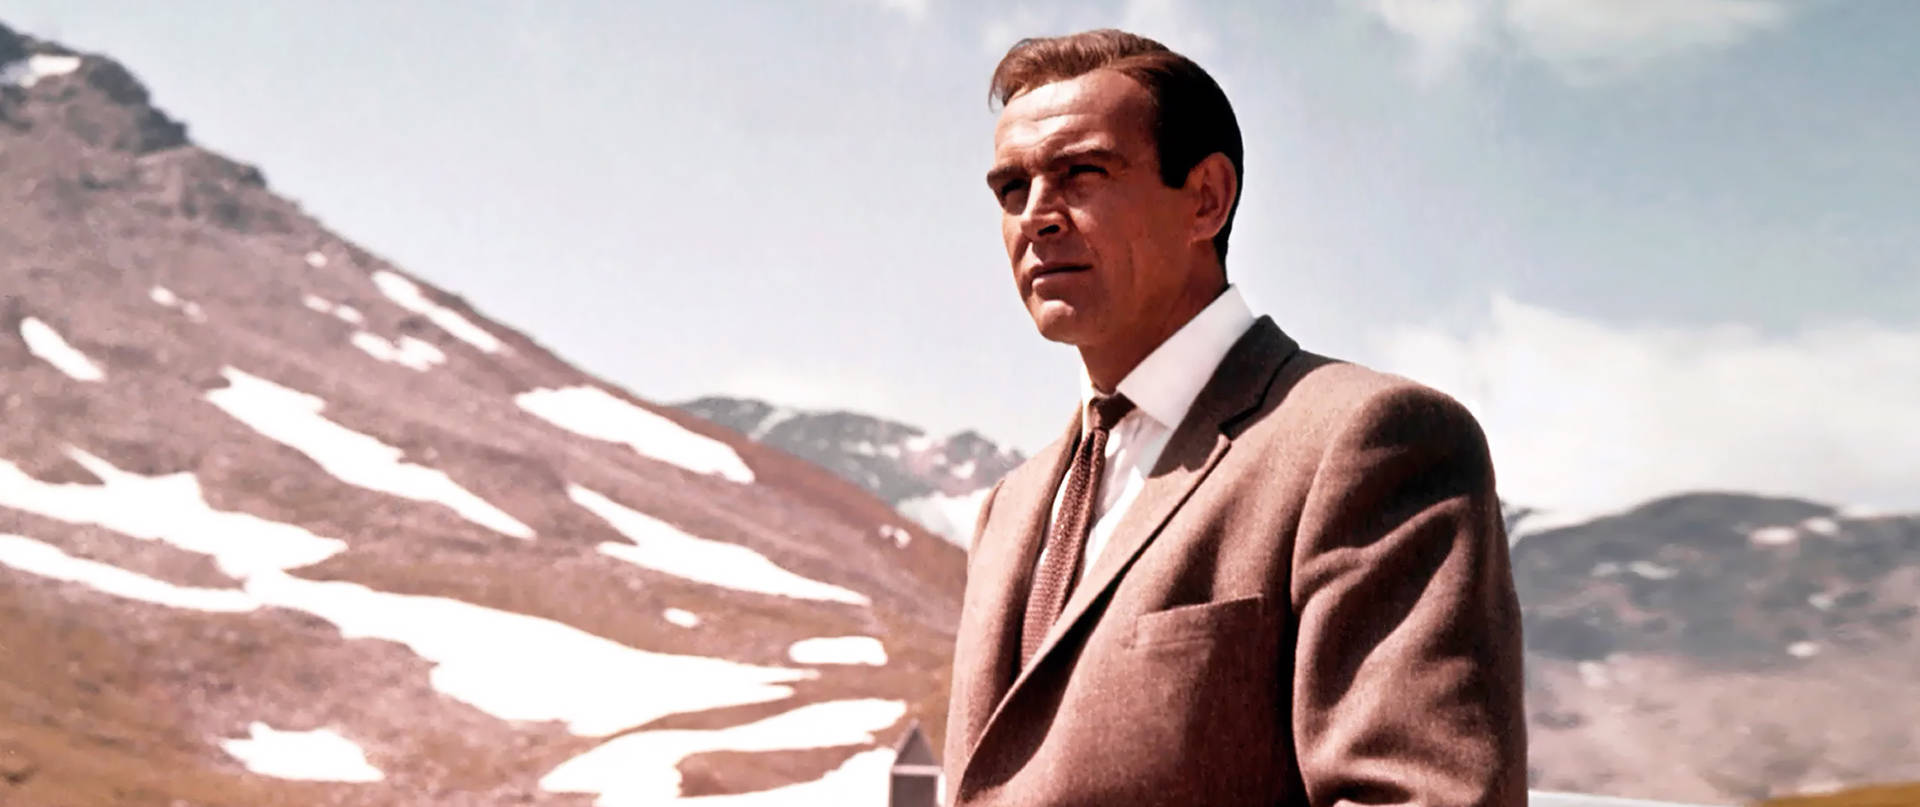 Sean Connery As James Bond Wallpaper